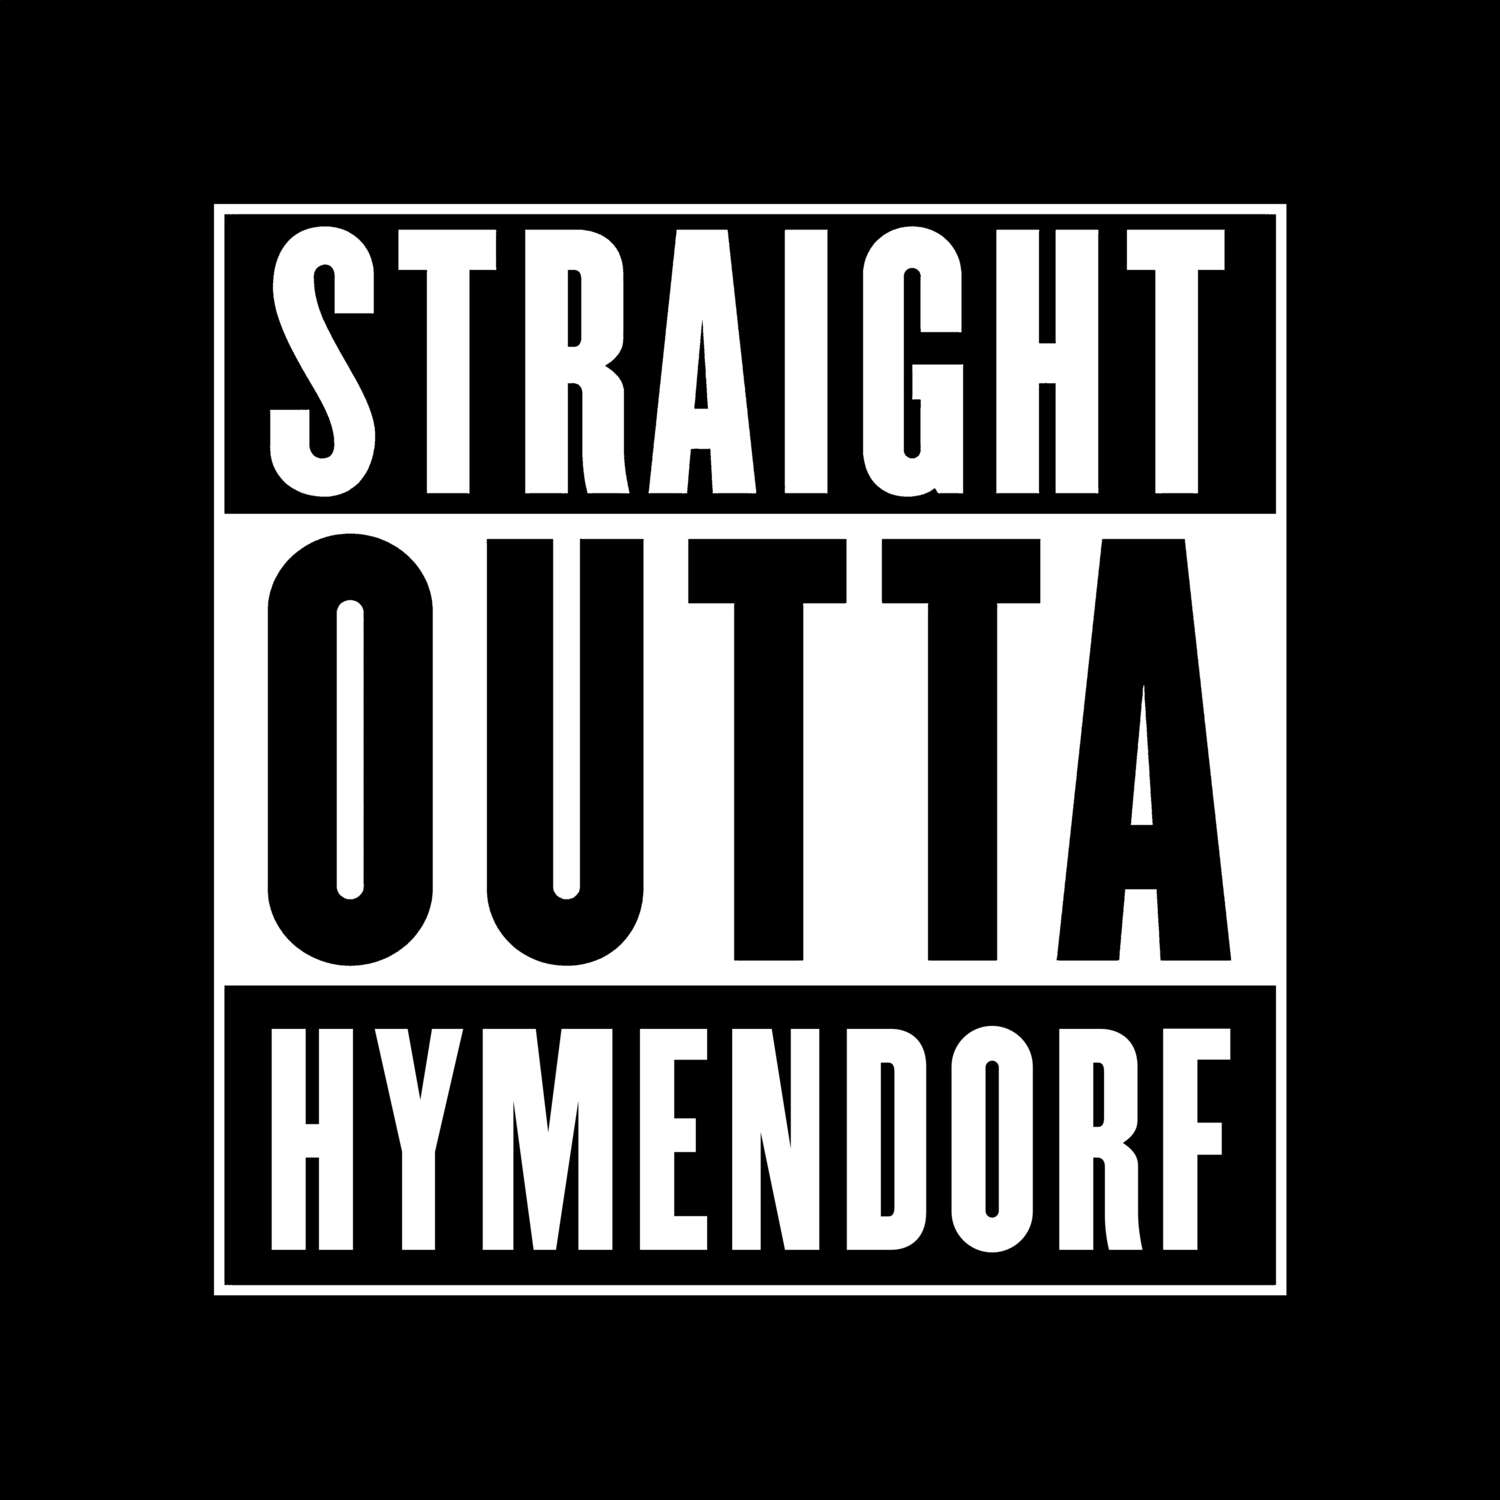 Hymendorf T-Shirt »Straight Outta«